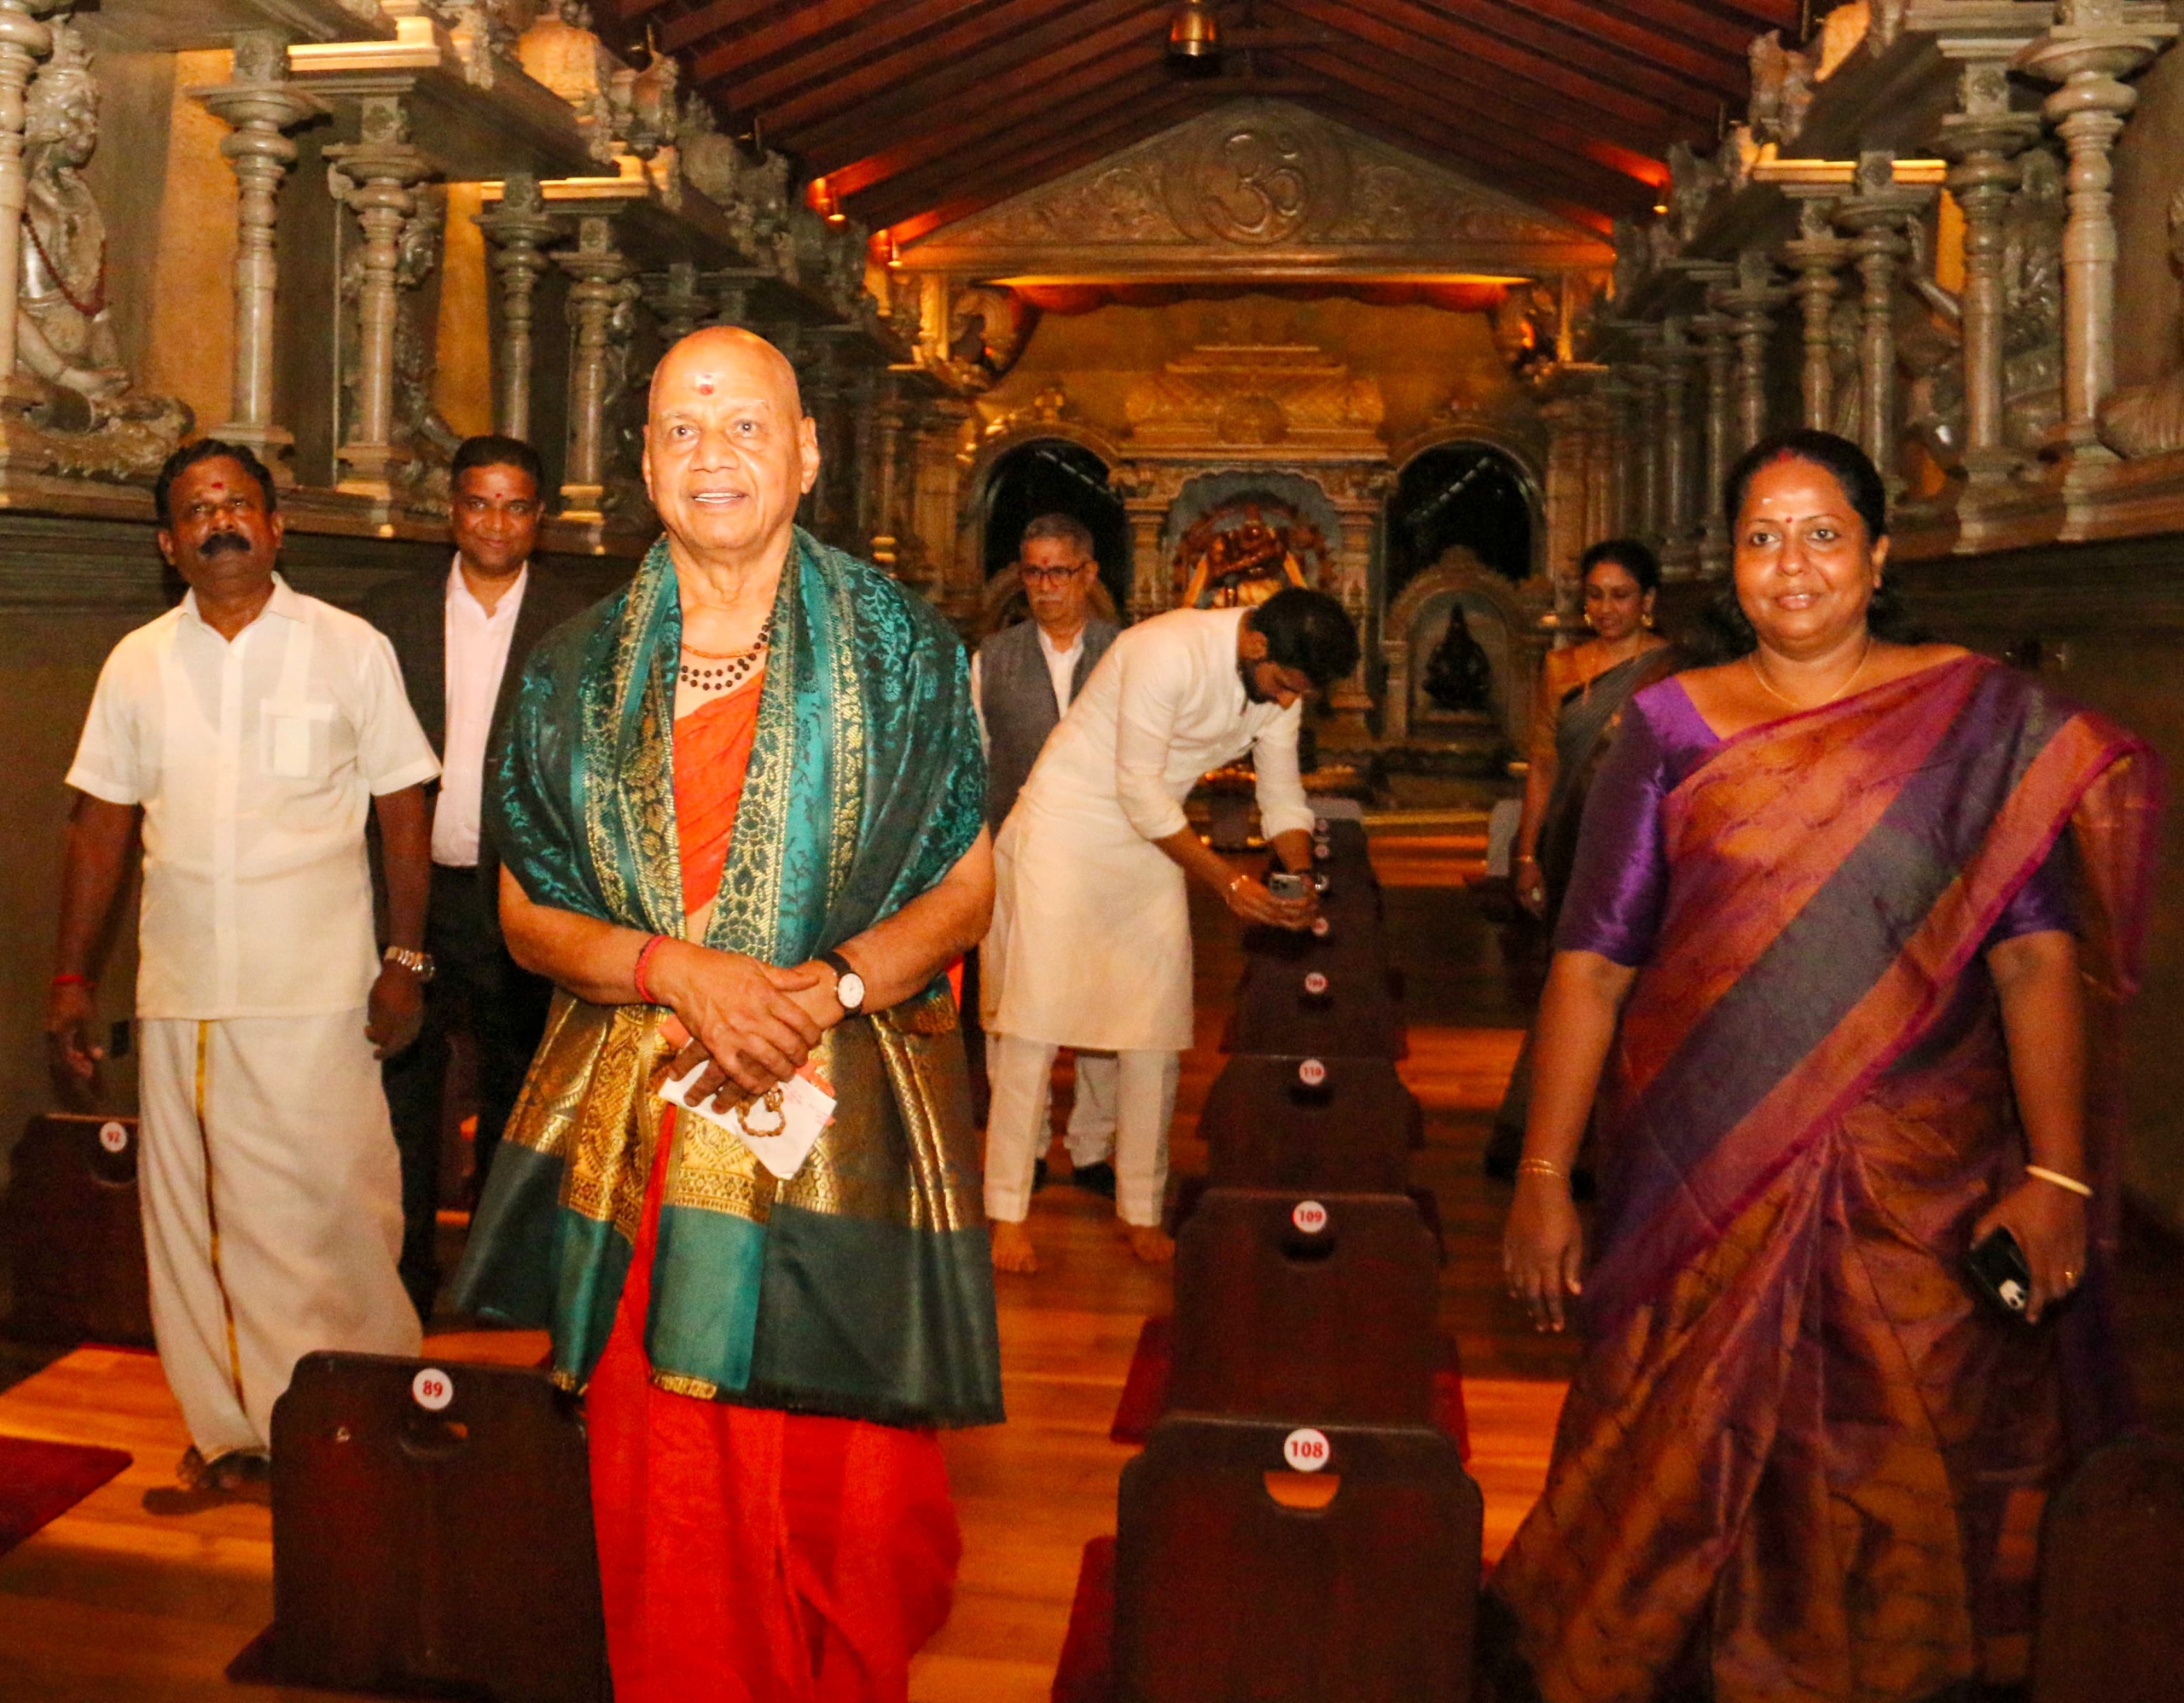 His holiness Swami Govind Dev Giri Maharaj's visit